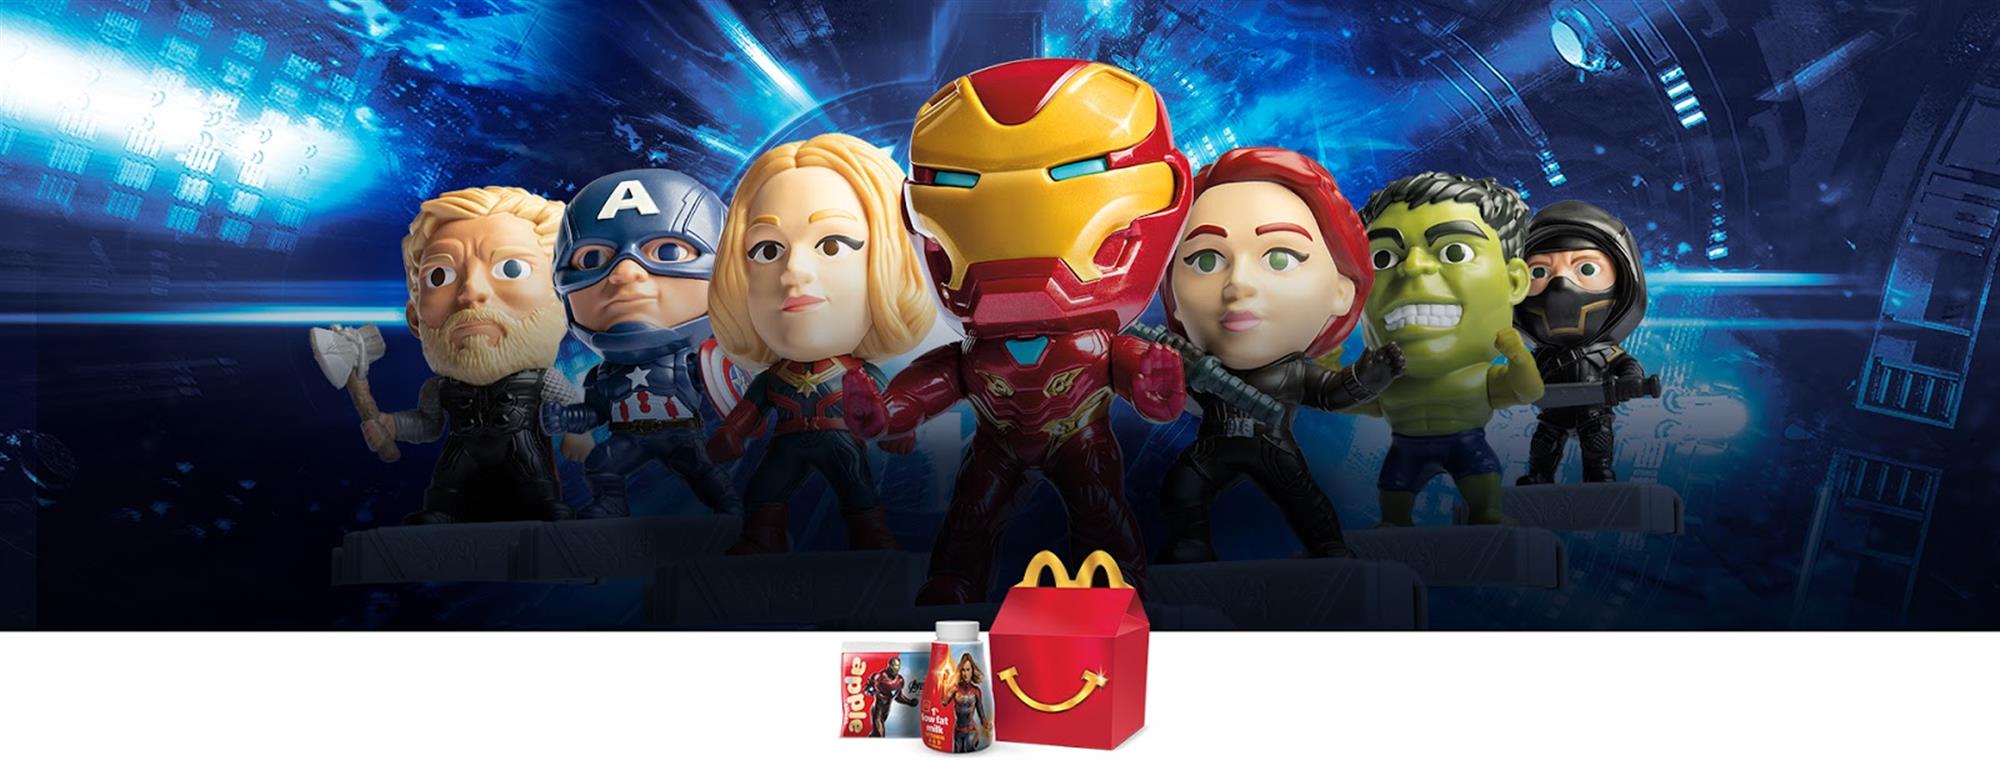 U Pick McDonald’s 2019 Marvel Avengers Endgame Happy Meal Toys Free Shipping 